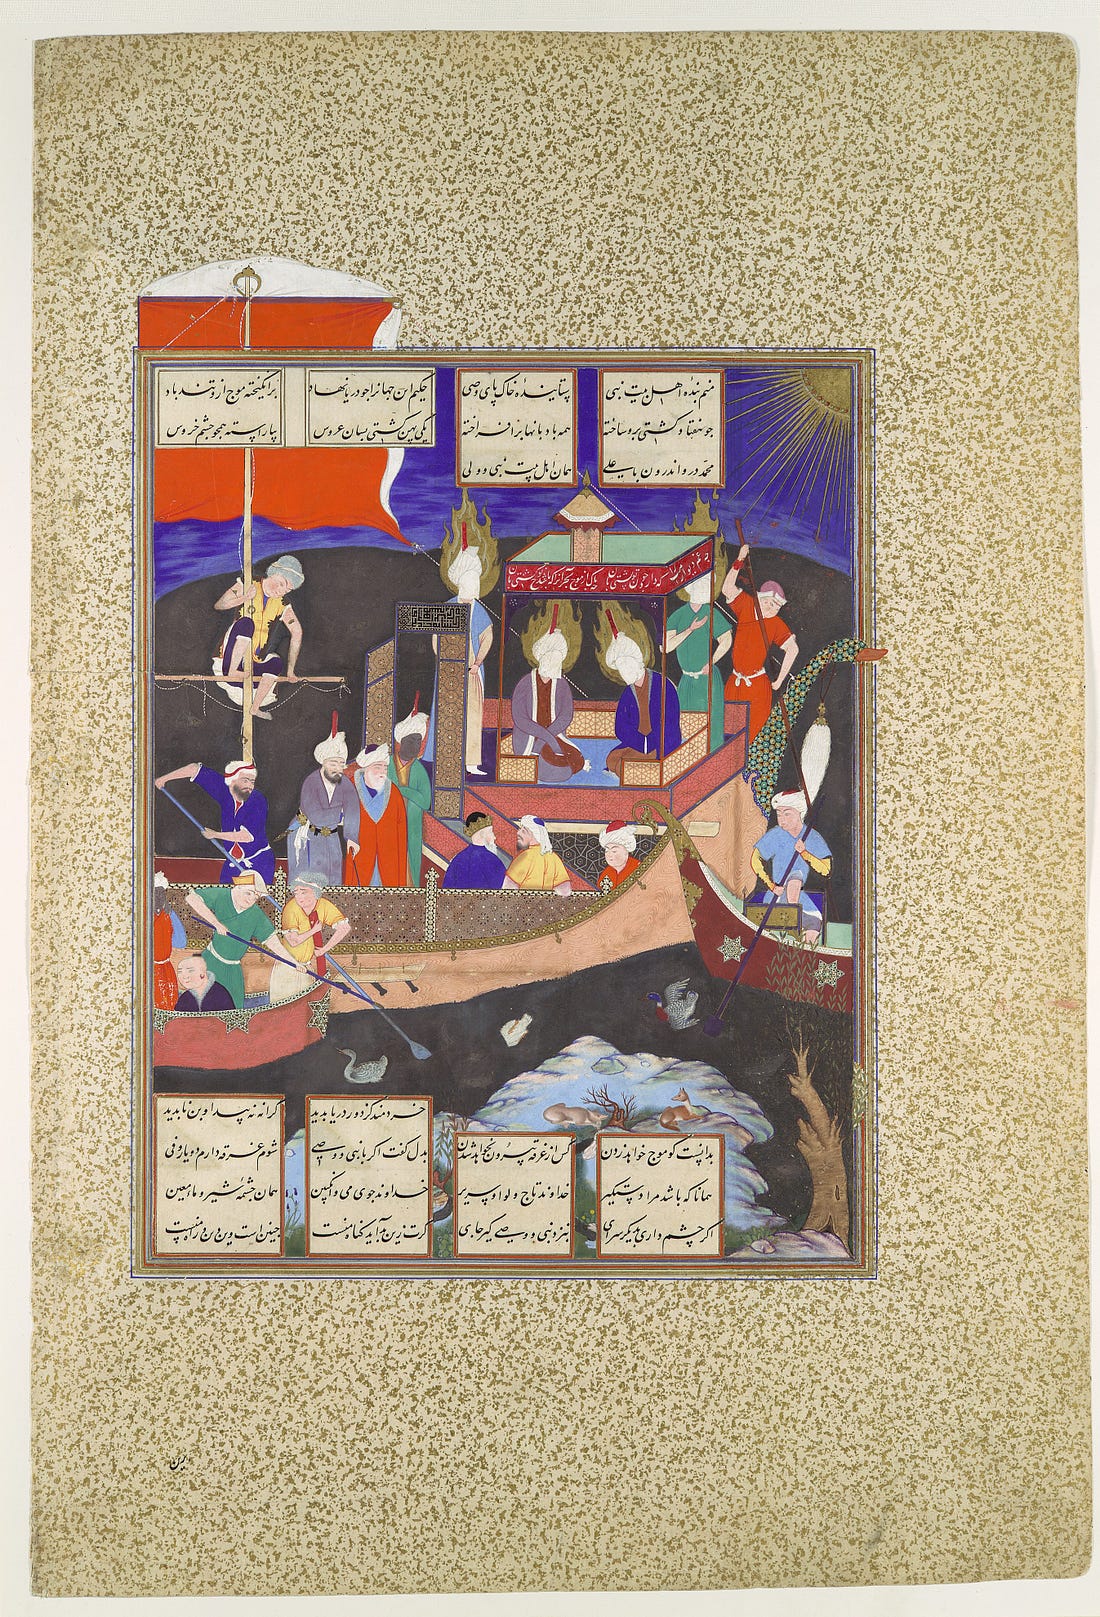 ship-of-faith-houghton-shahmana-metropolitan-museum